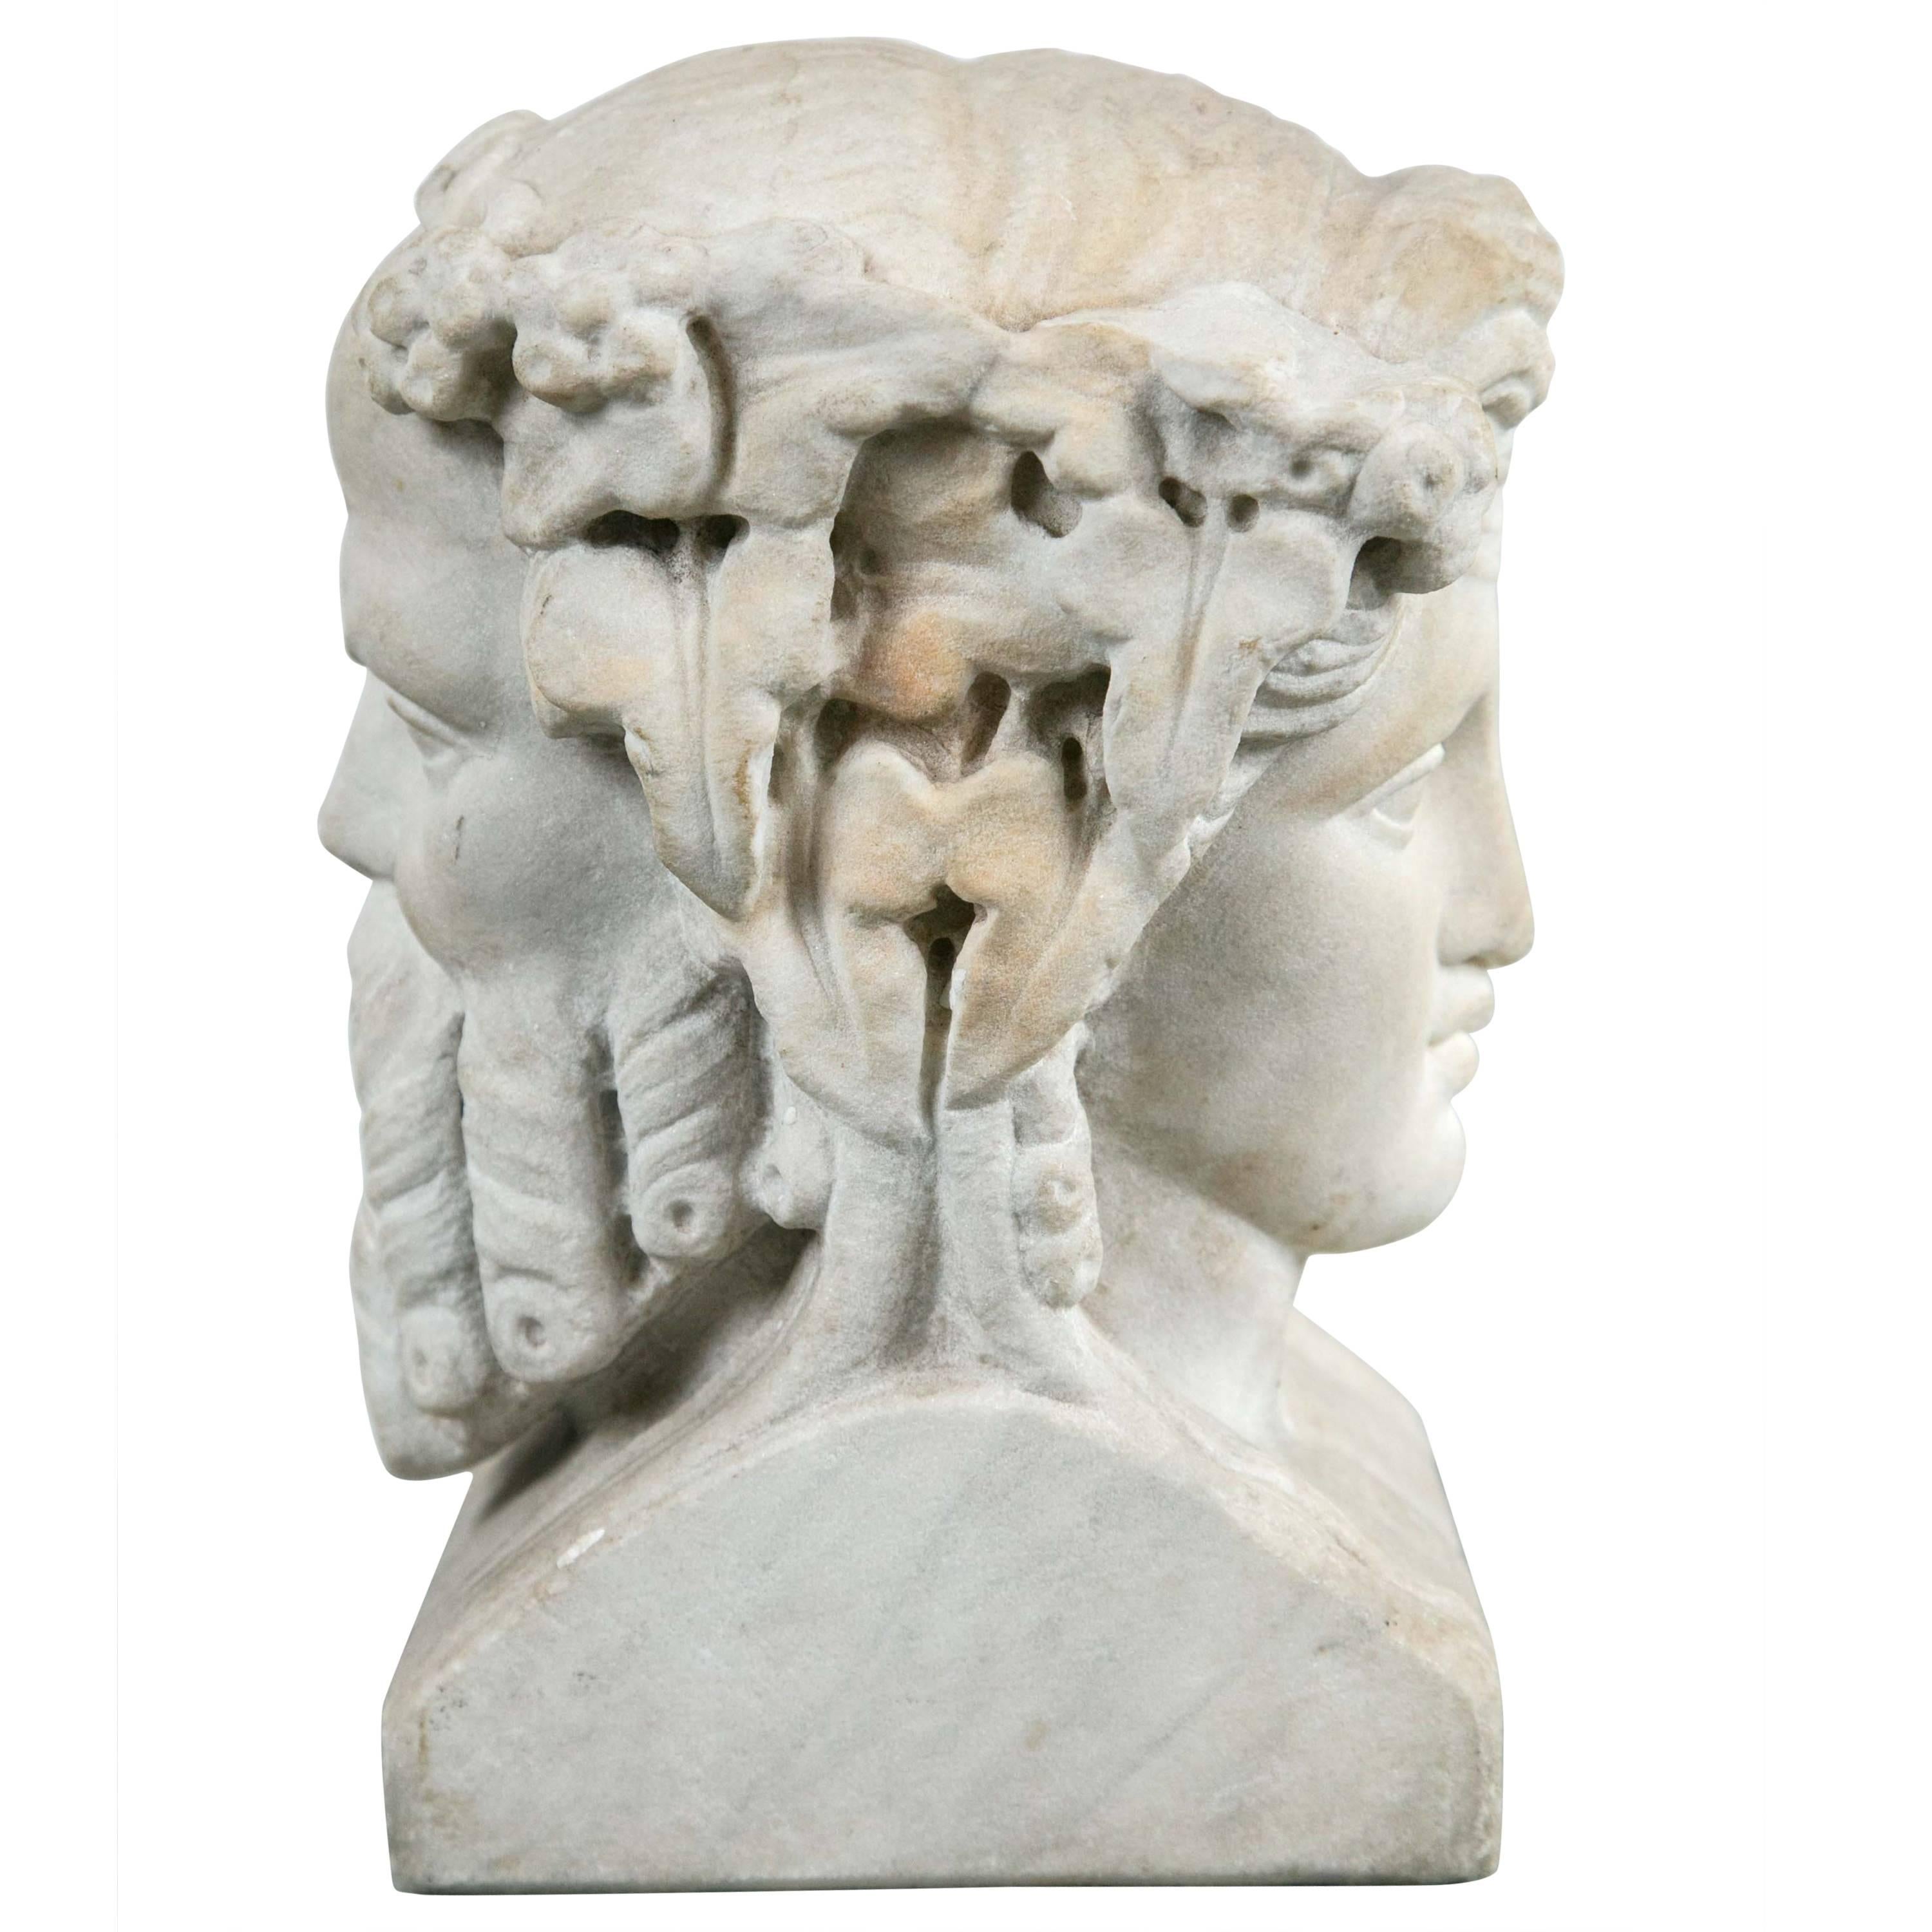 Carved Bust of the God Janus